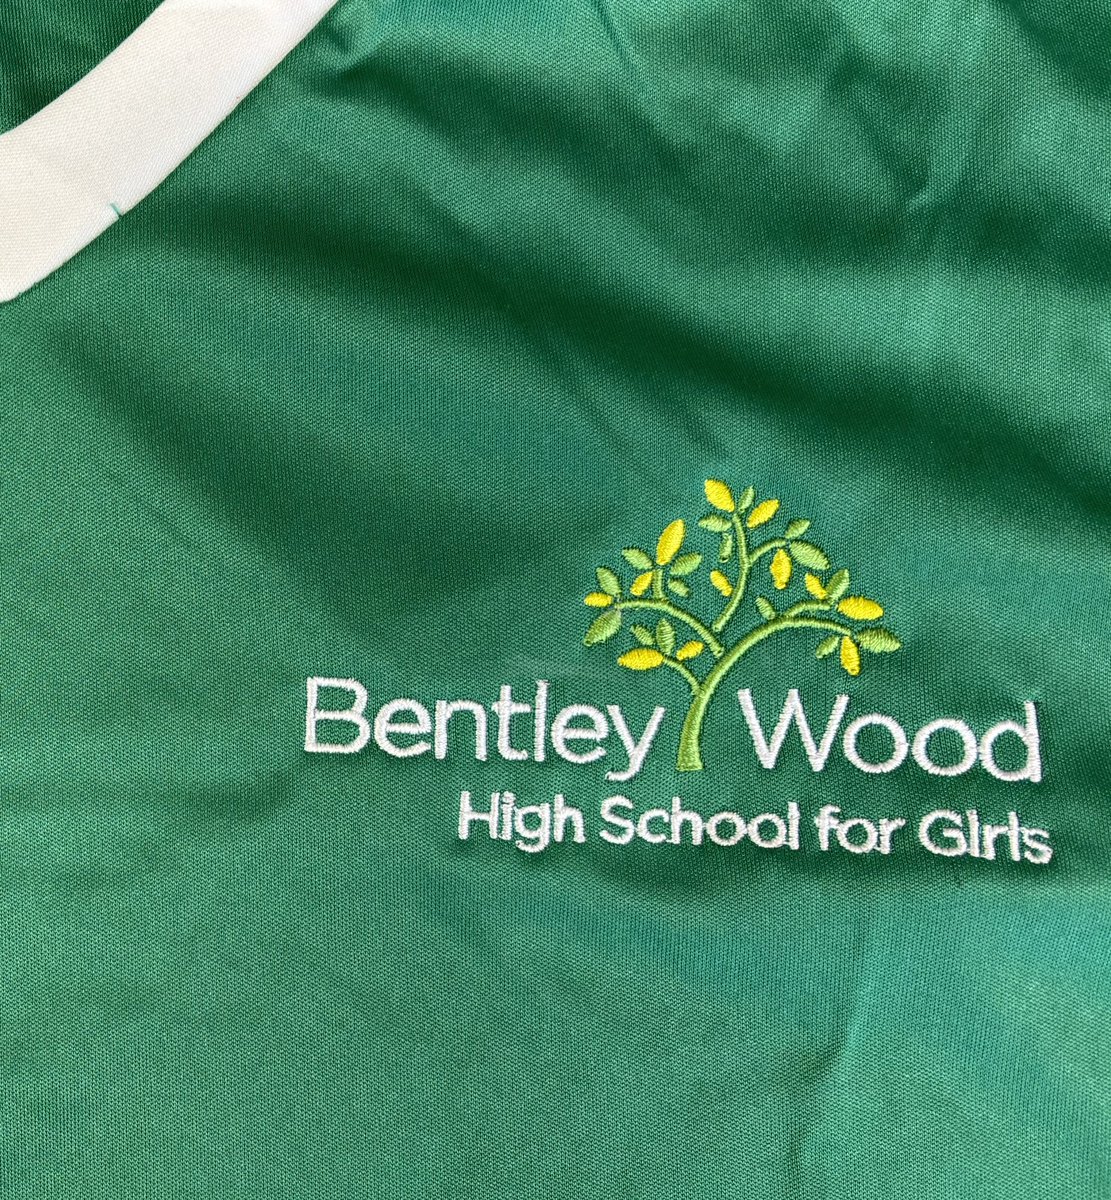 🟢 New school kit partnership 
@craftsportswearuk x @BentleyWoodSch                                                                                            ⚡️ @inspiredteamwear_rs  #suppliedbyinspired 💥